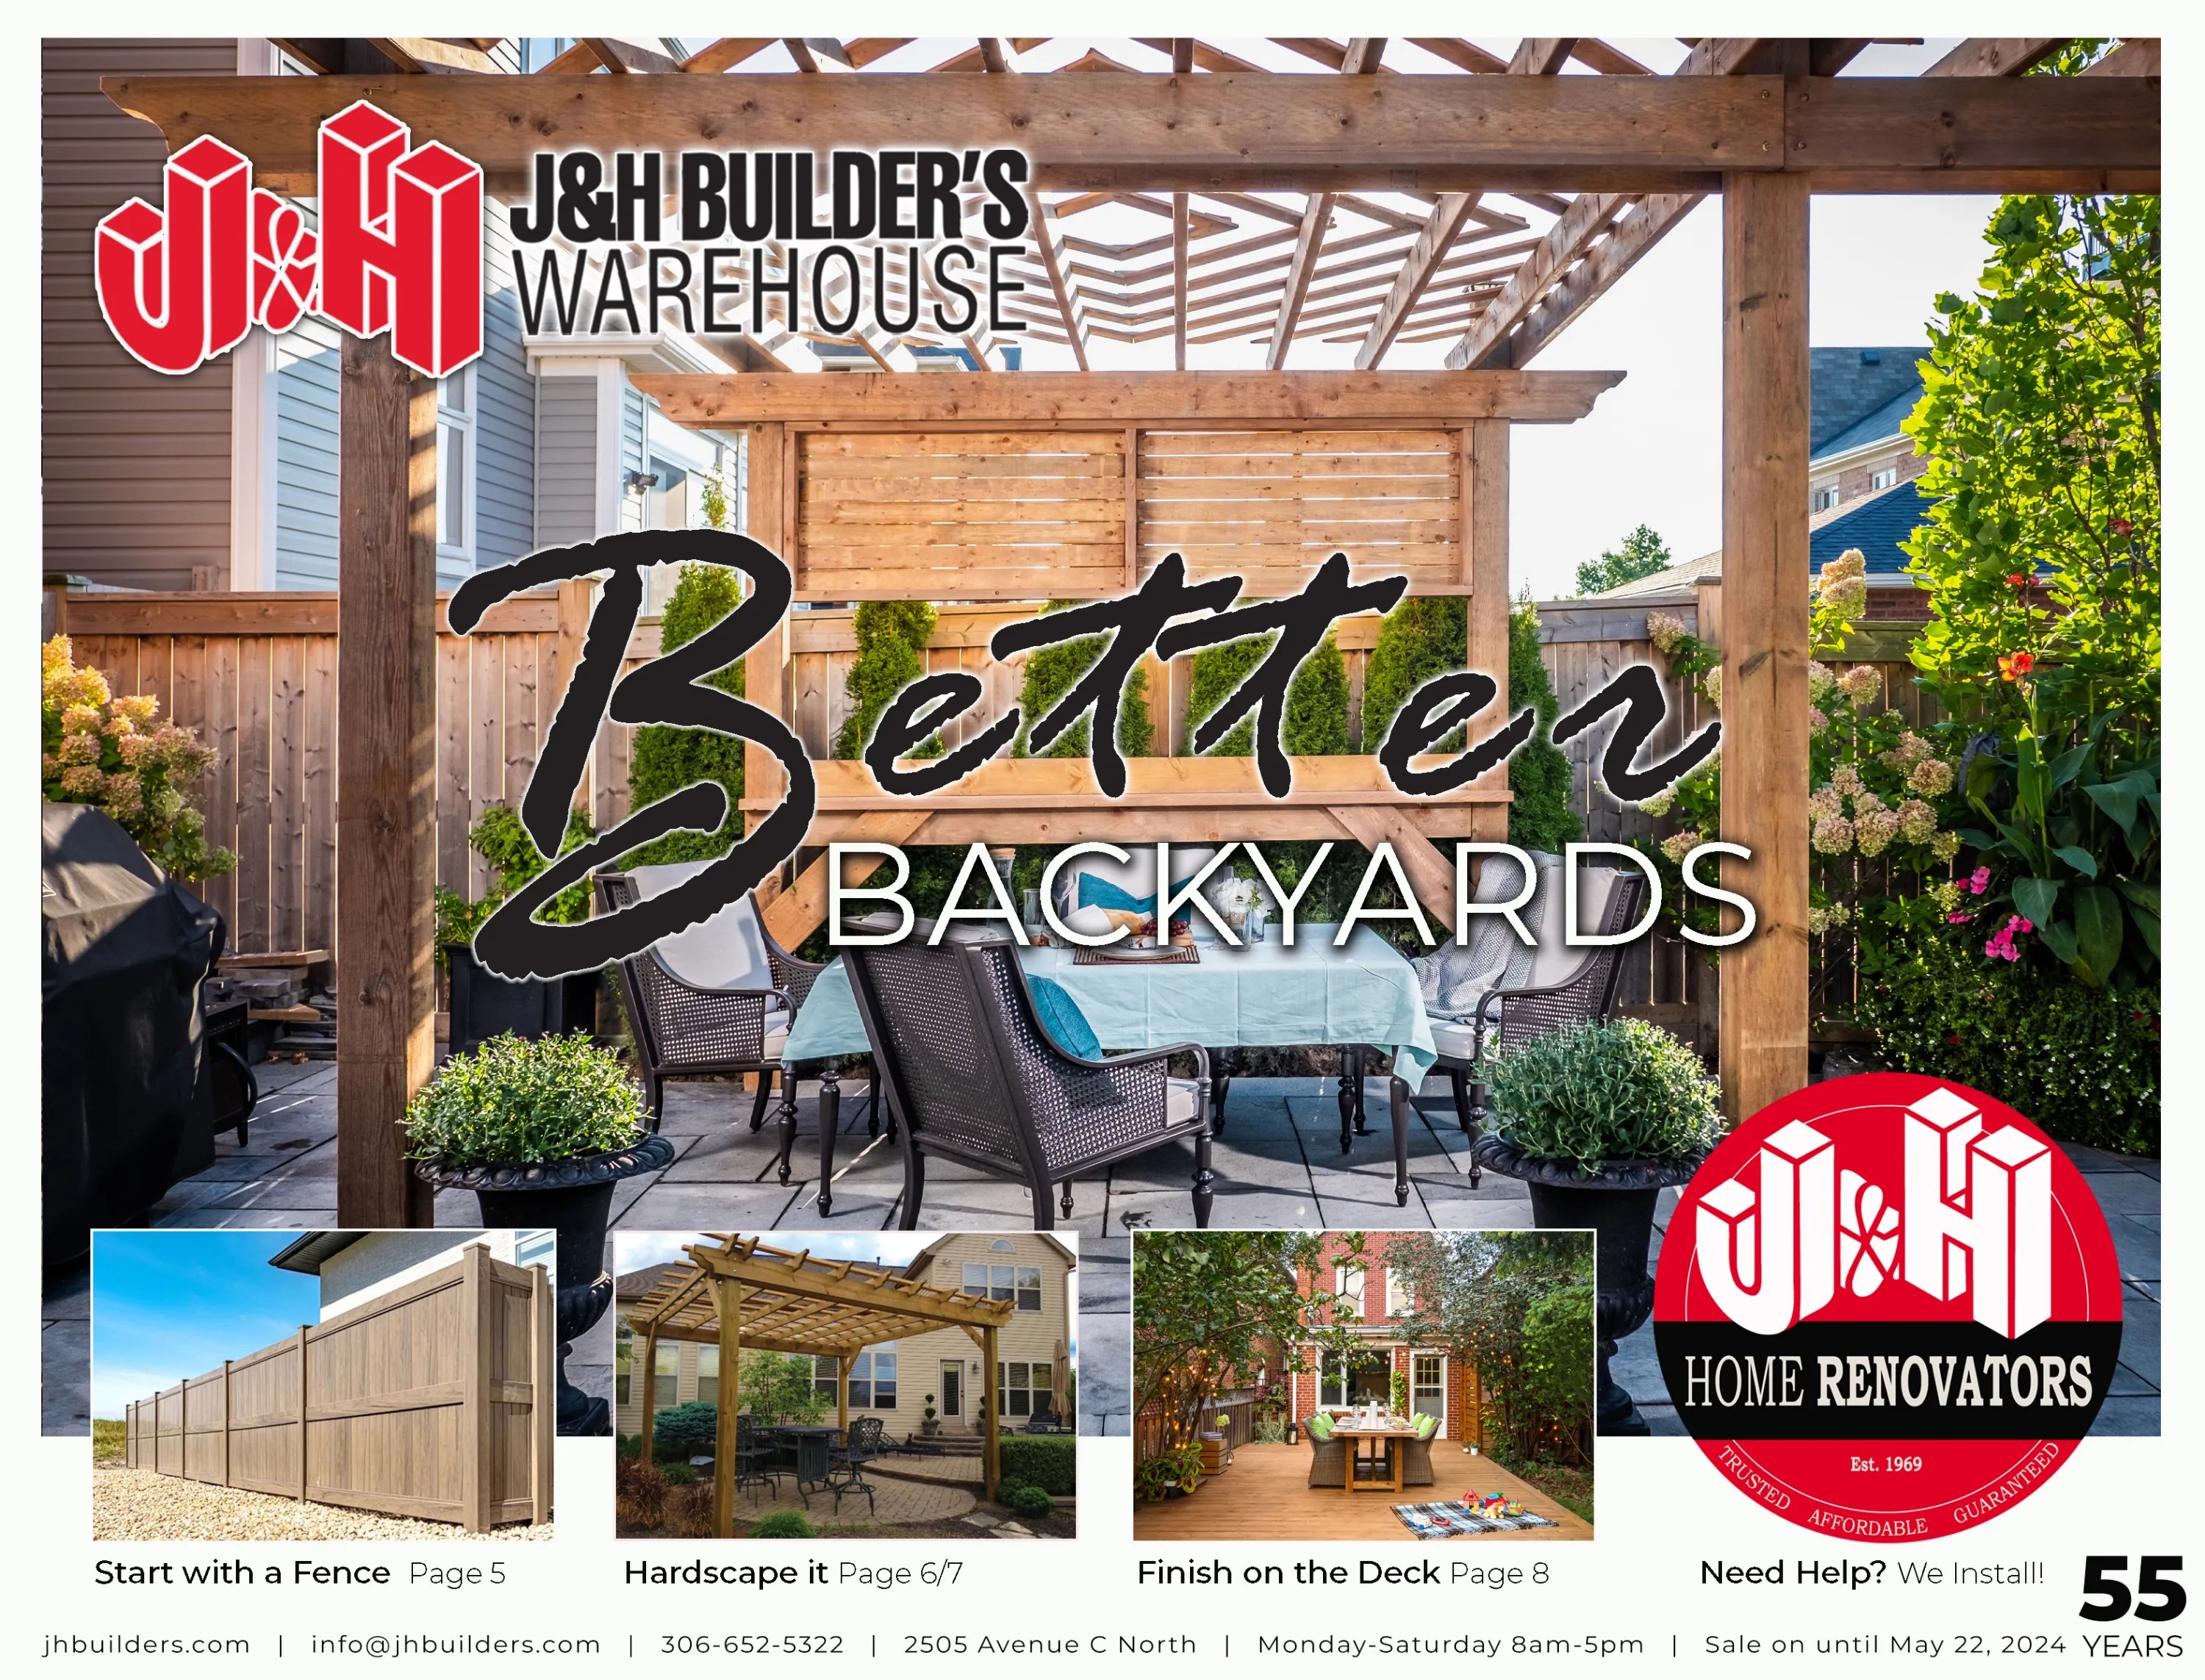 J&H Builder's Warehouse - Flyer Specials